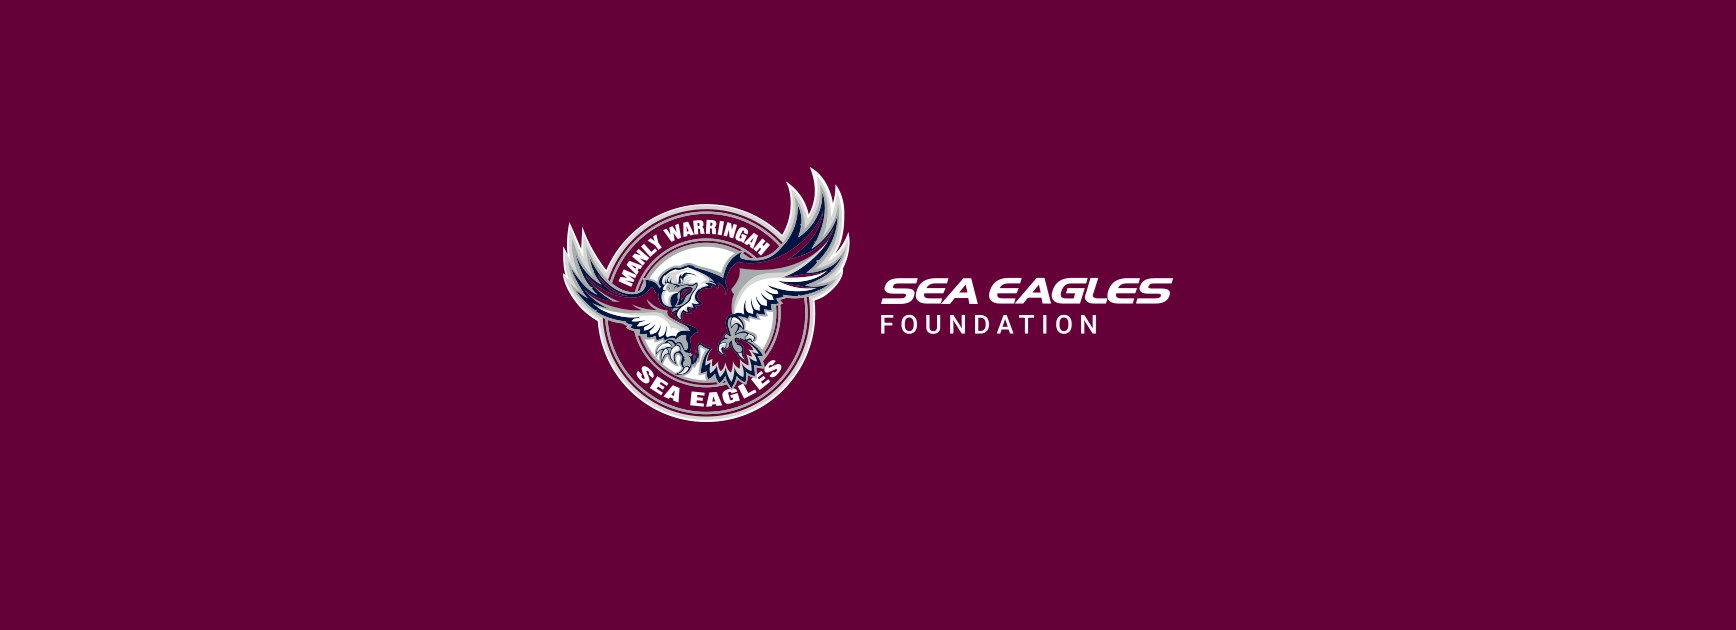 Club launches Sea Eagles Foundation